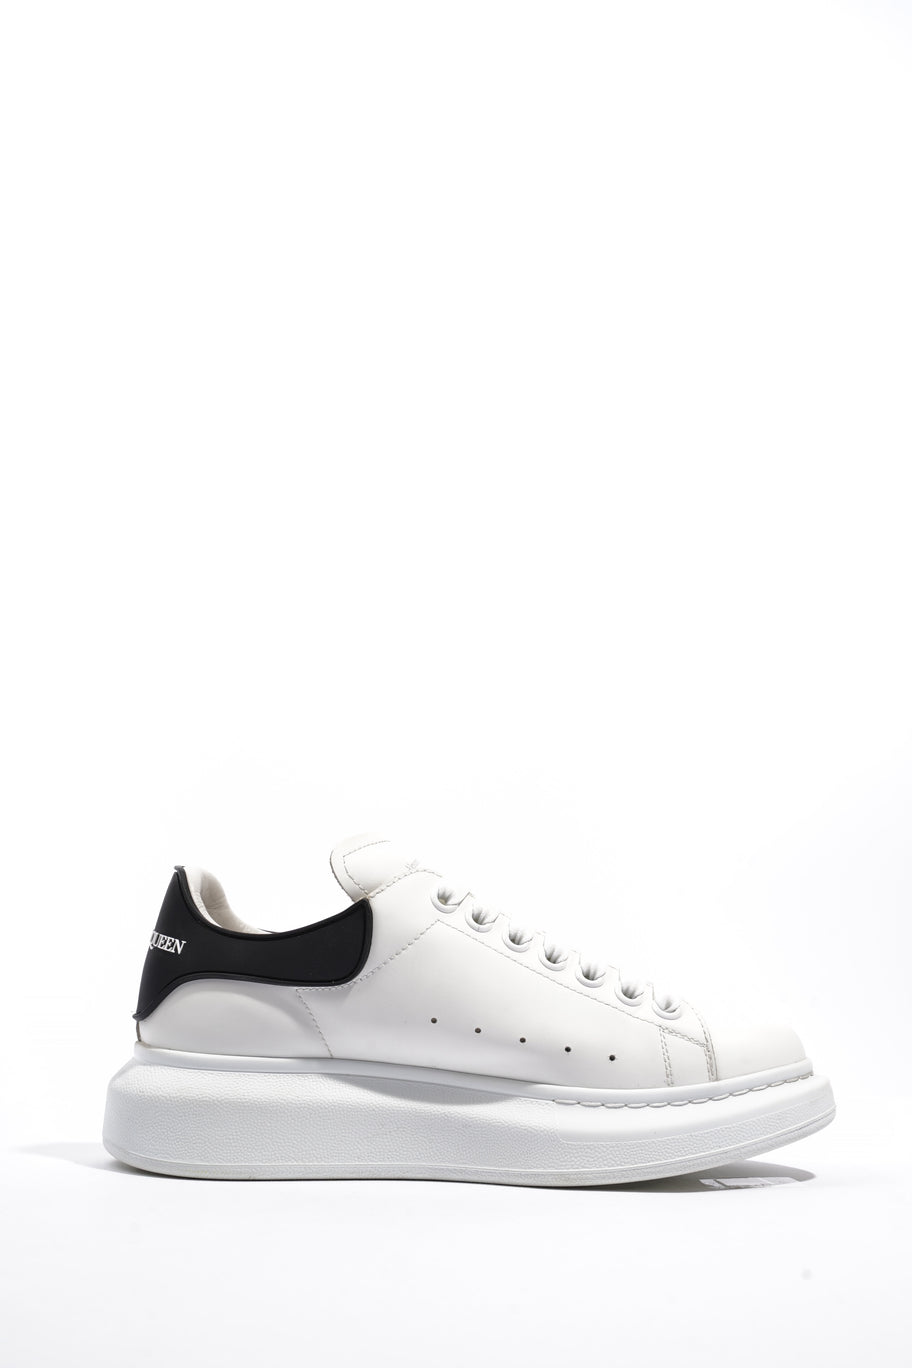 Oversized Sneaker White / Black Tab Leather EU 38 UK 5 Image 4